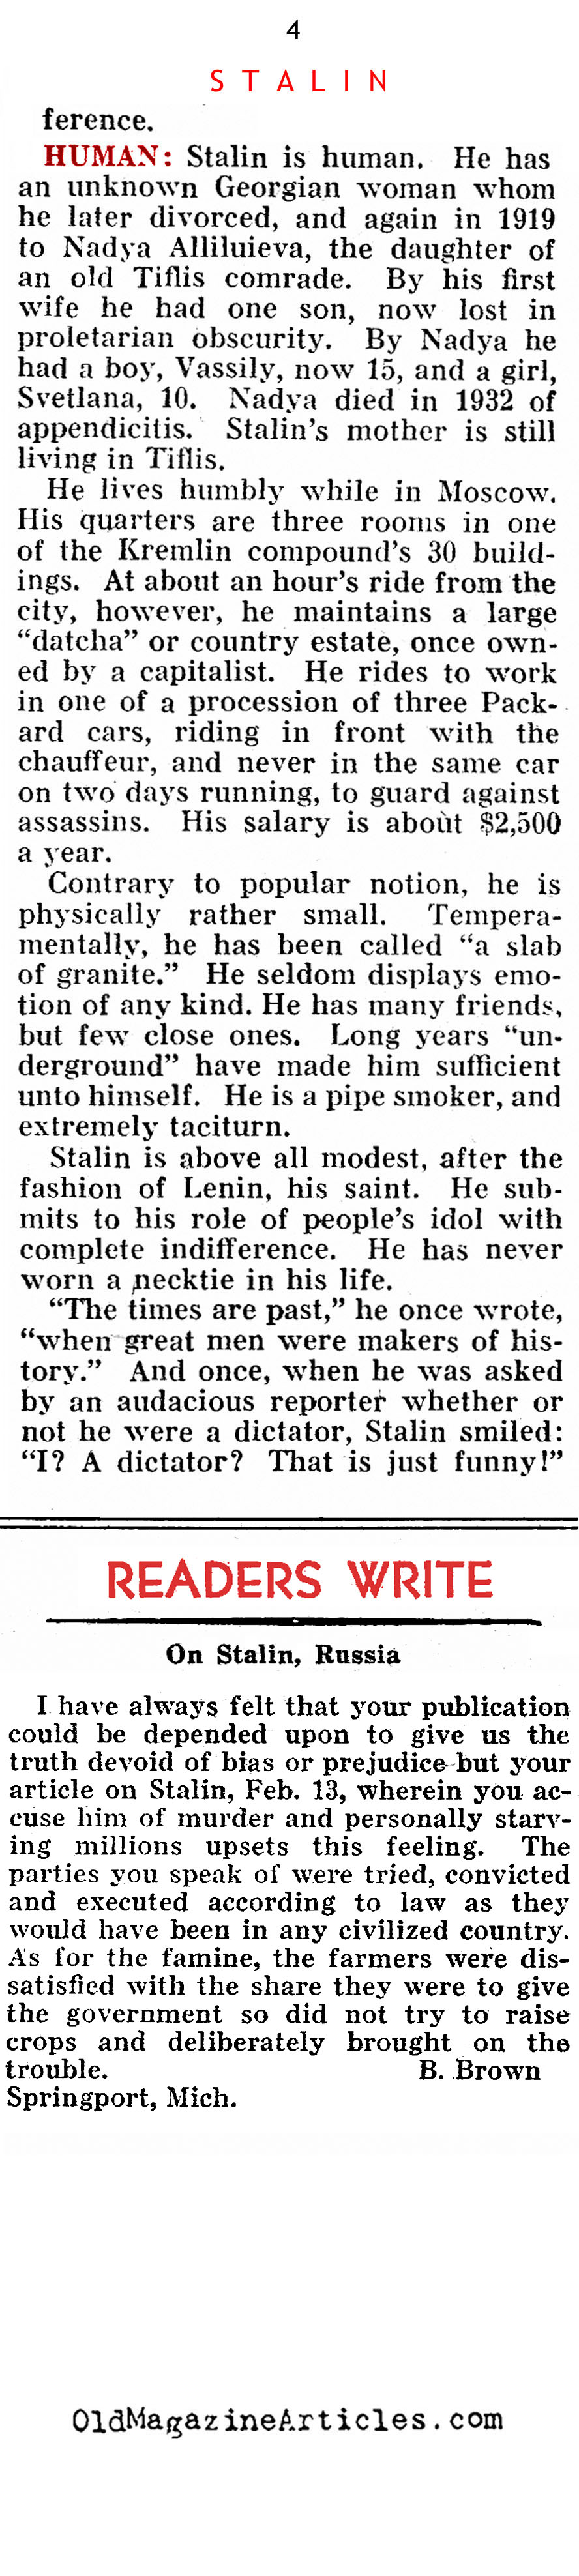 Meet Joseph Stalin (Pathfinder Magazine, 1937)